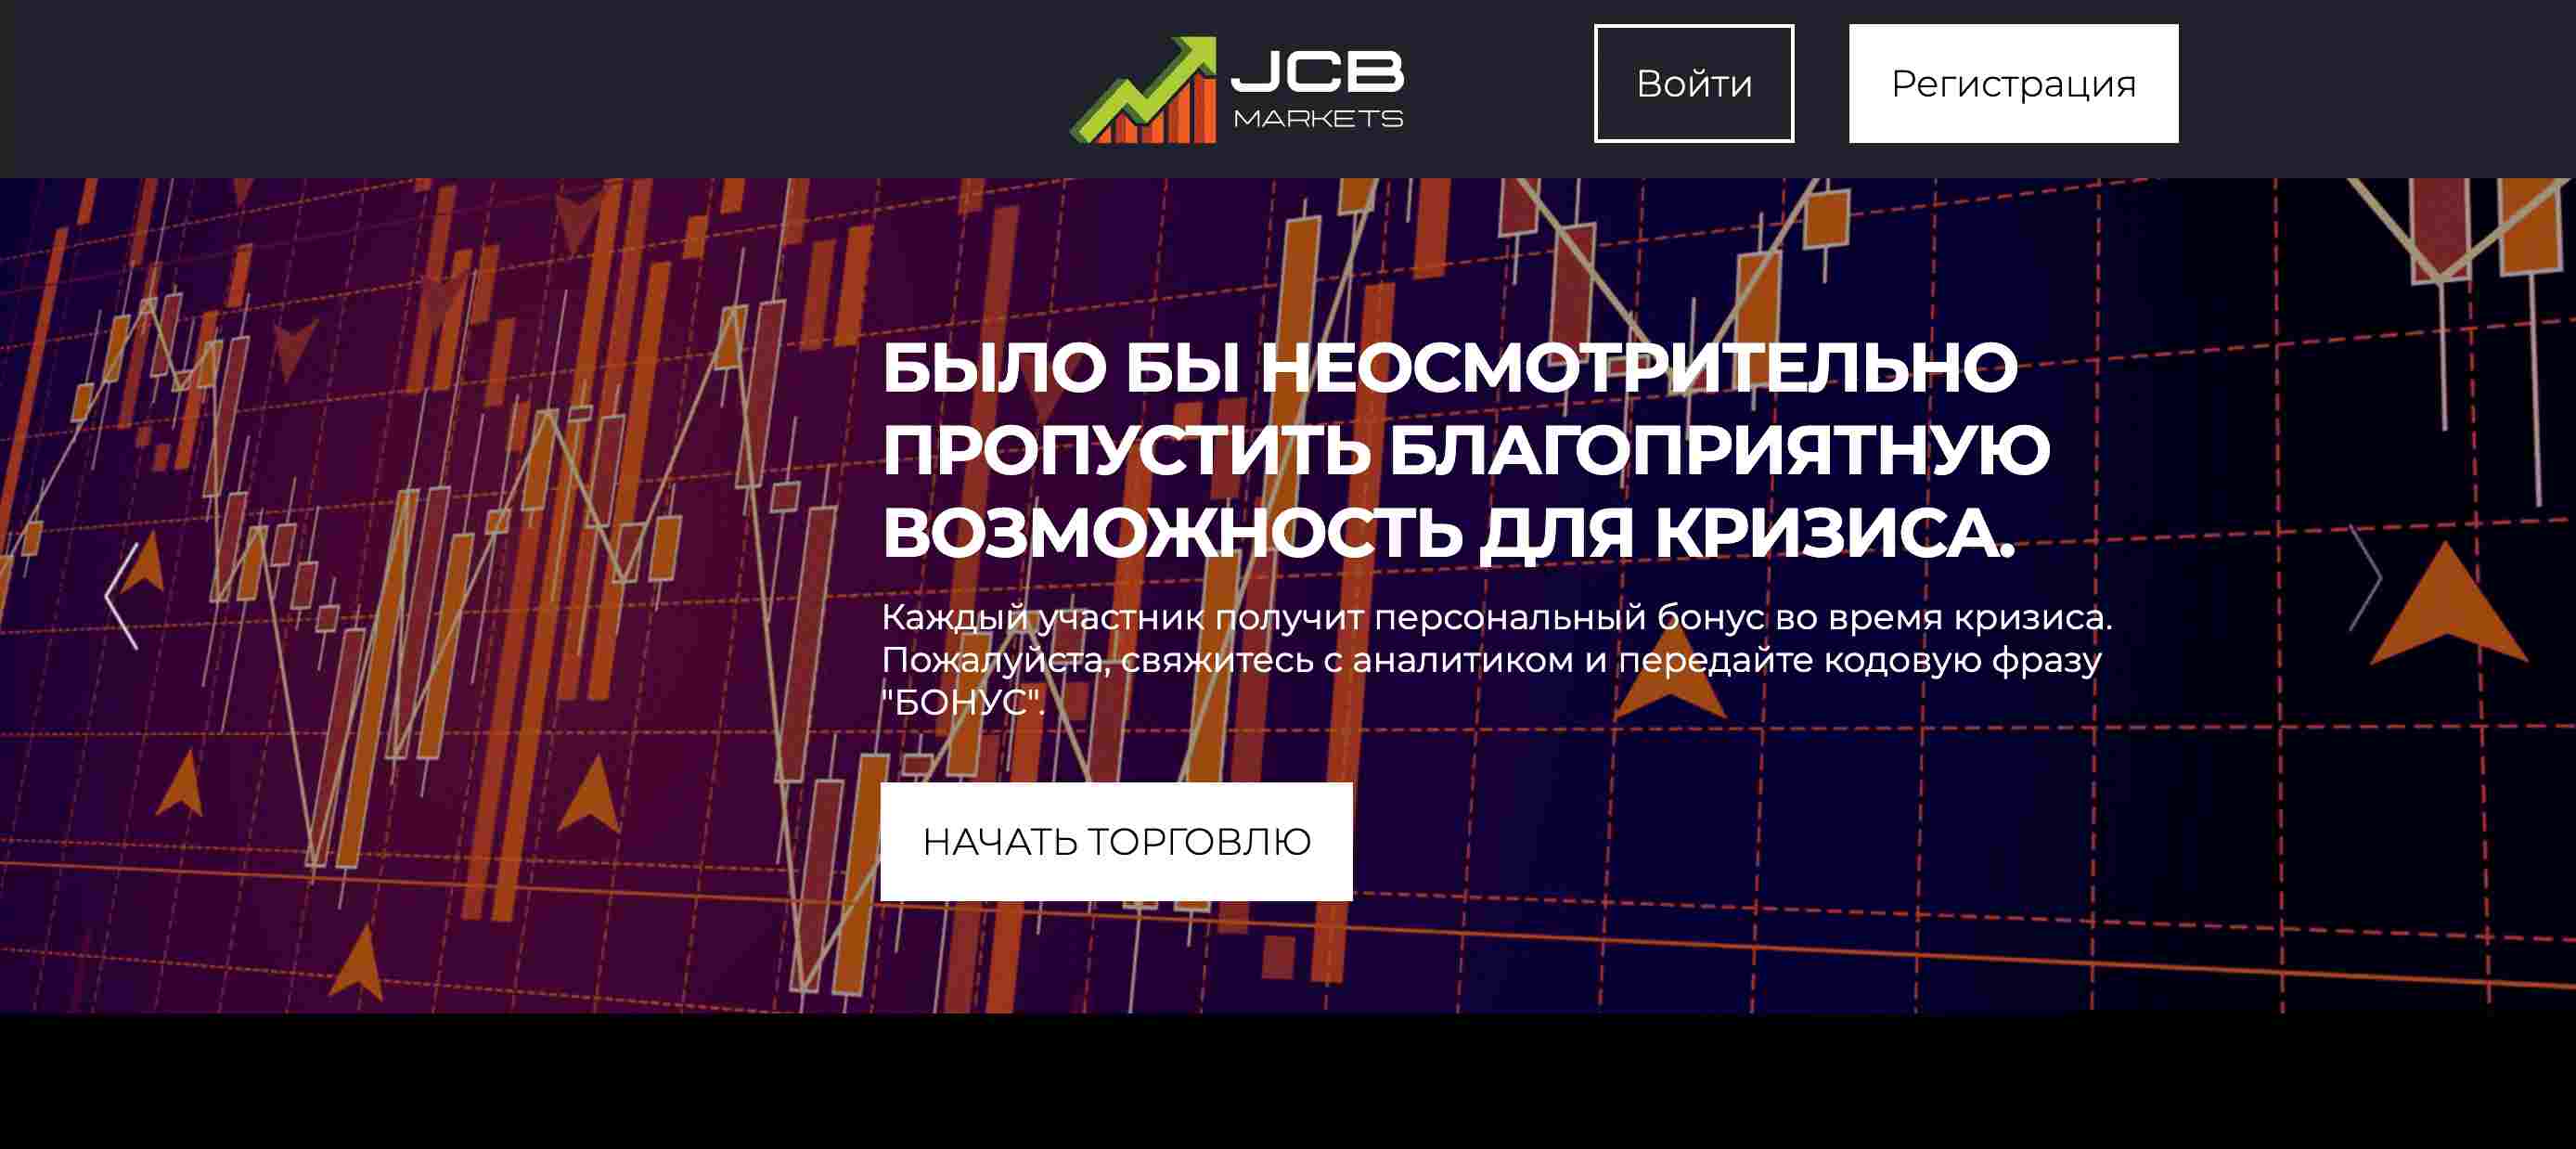 JCB Markets